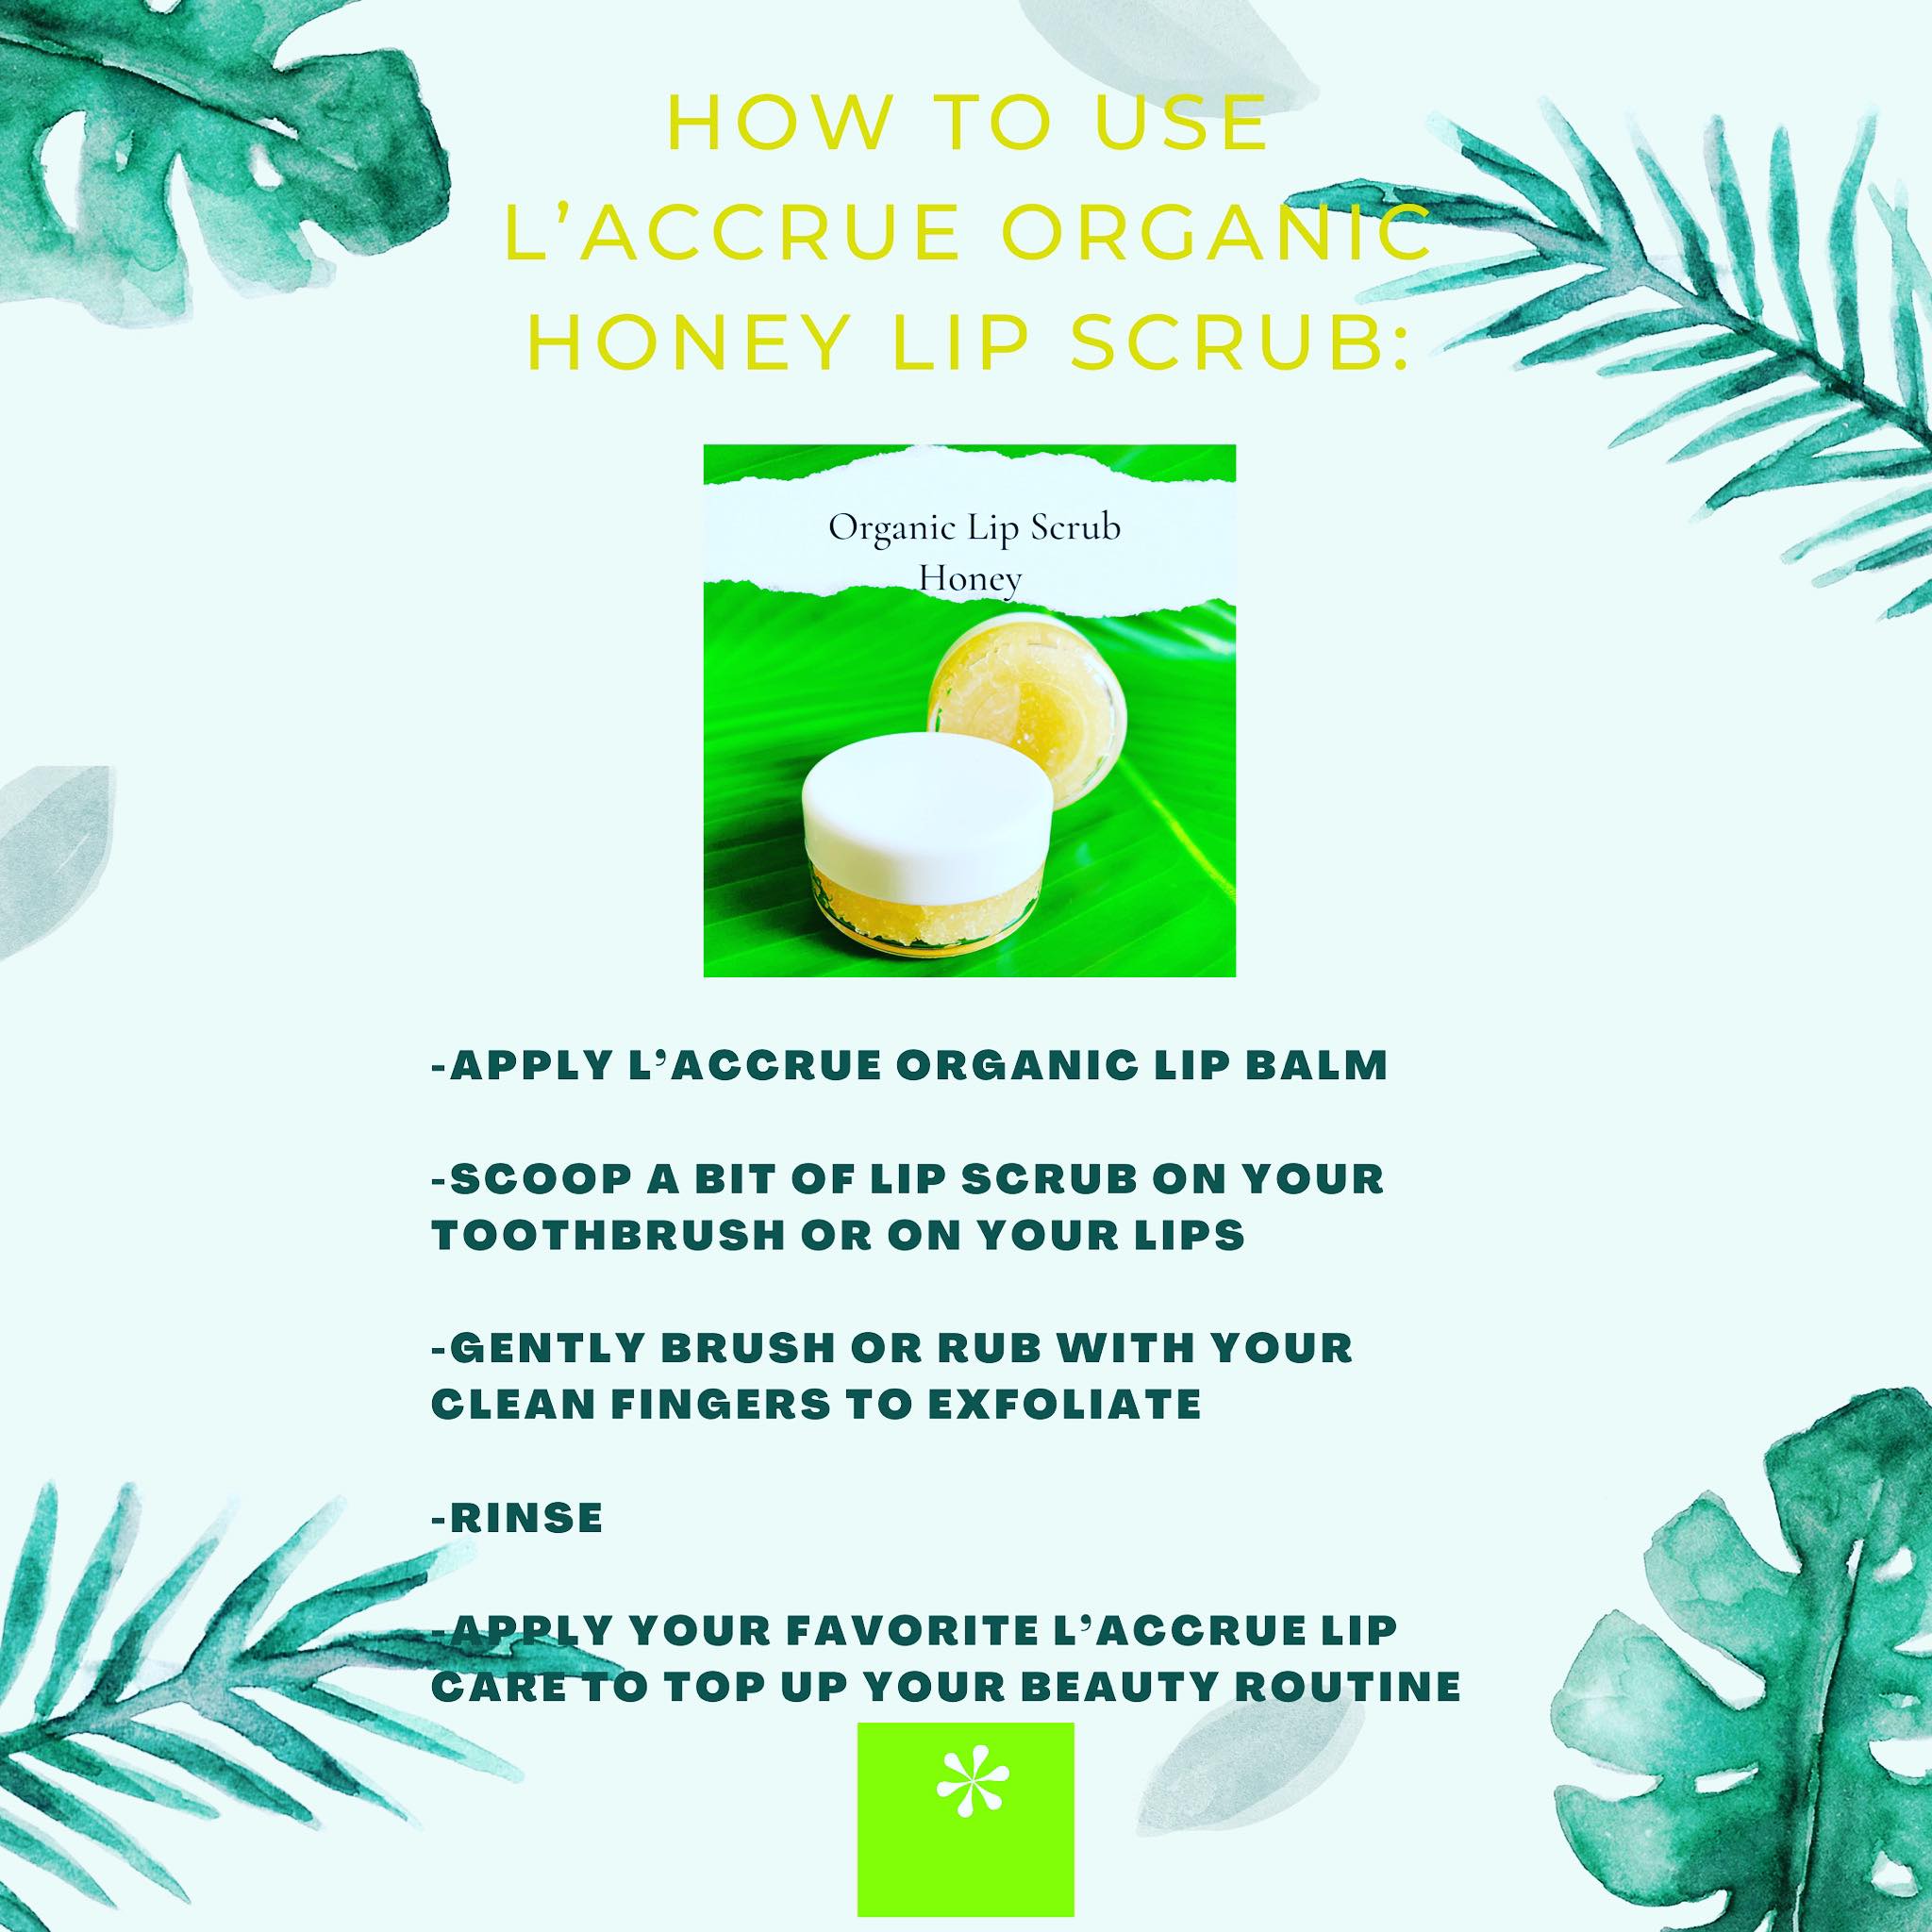 LACCRUE Organic Honey Lip Scrub